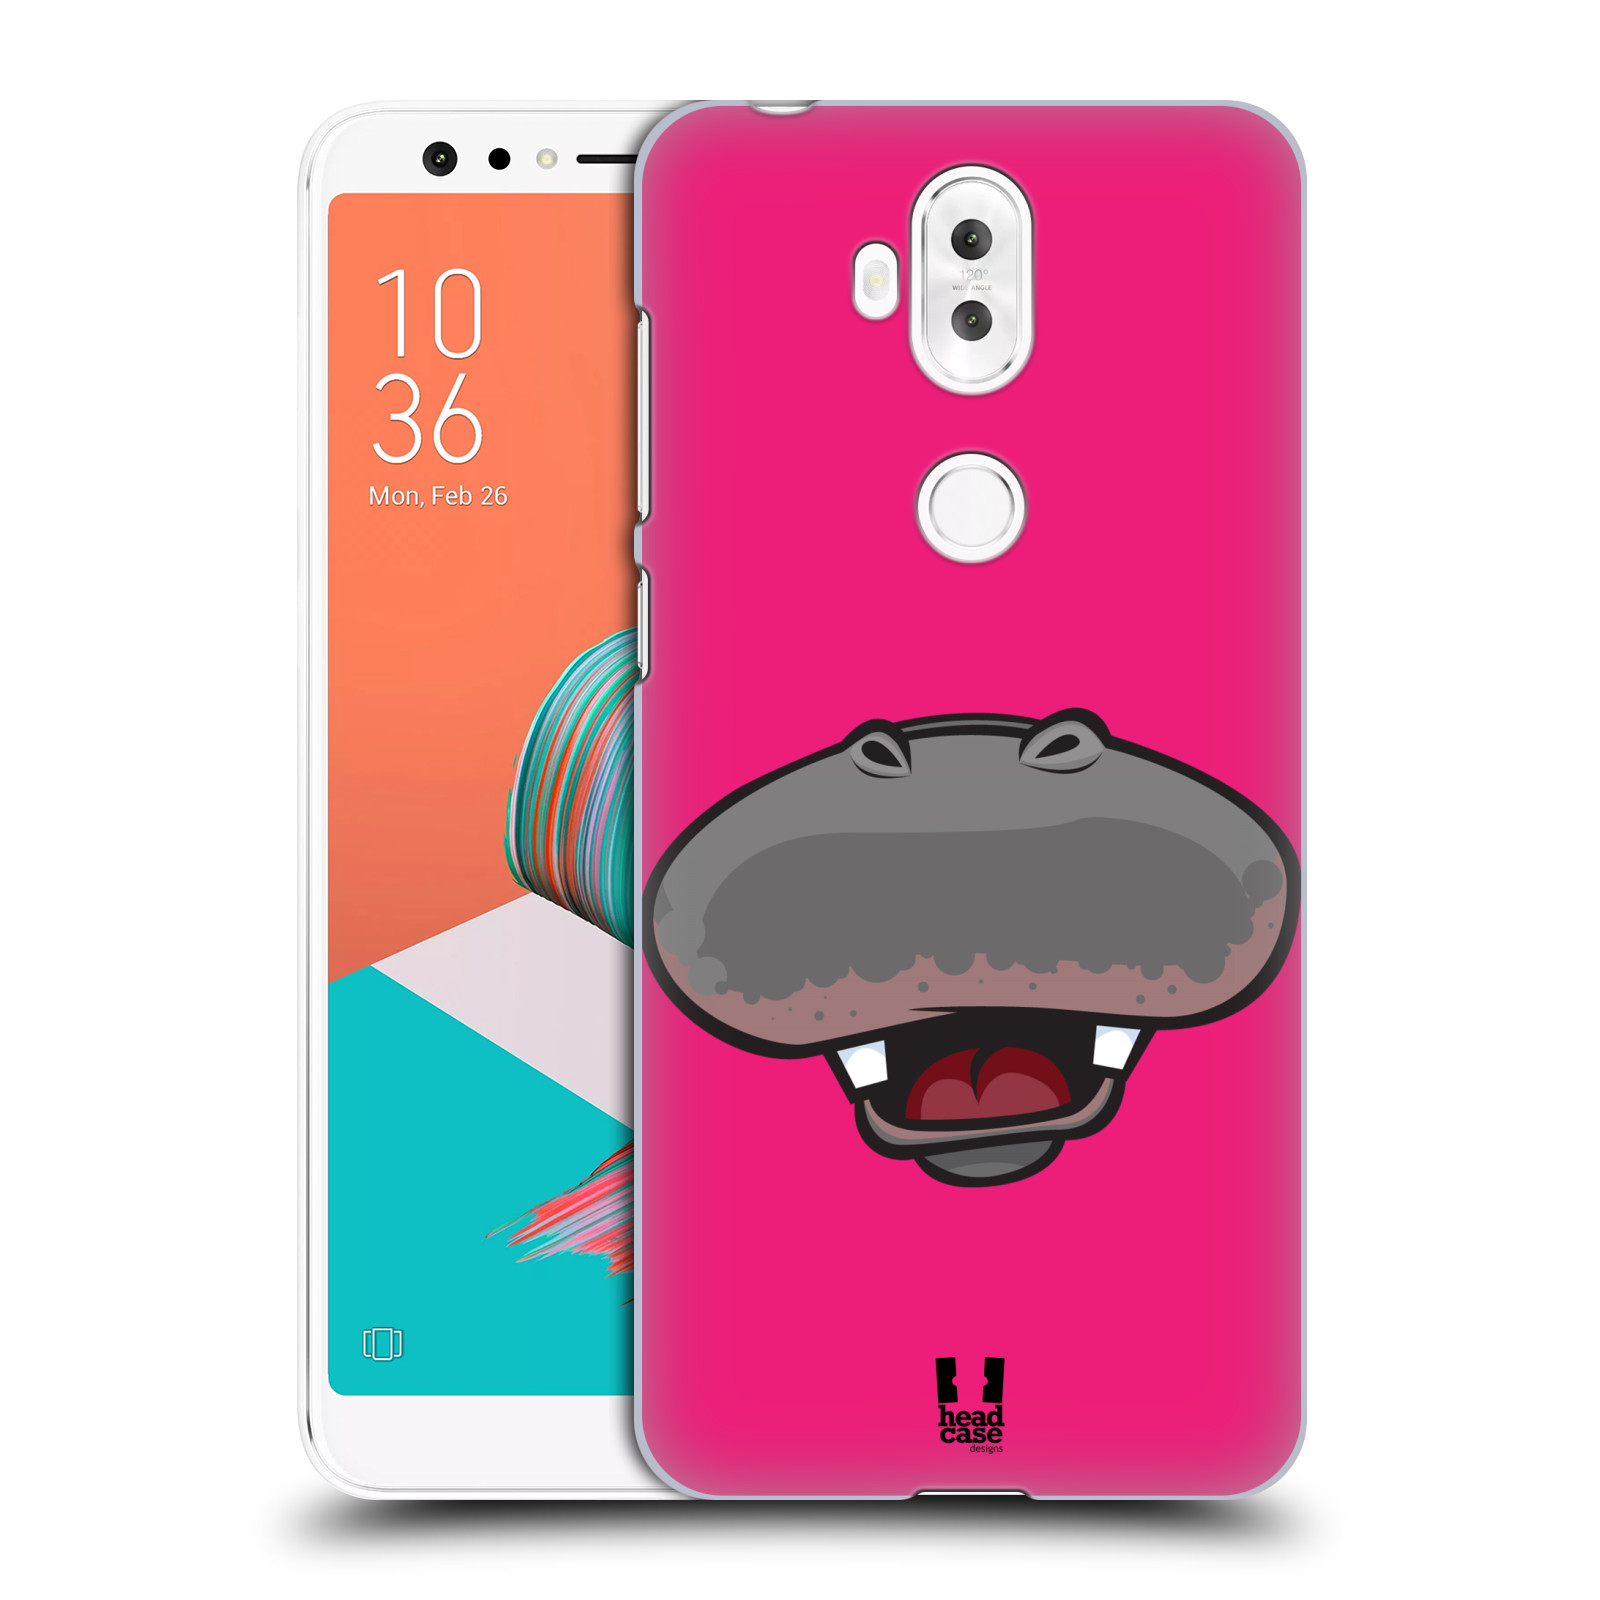 HEAD CASE plastový obal na mobil Asus Zenfone 5 LITE ZC600KL vzor Zvířecí úsměv hroch růžová